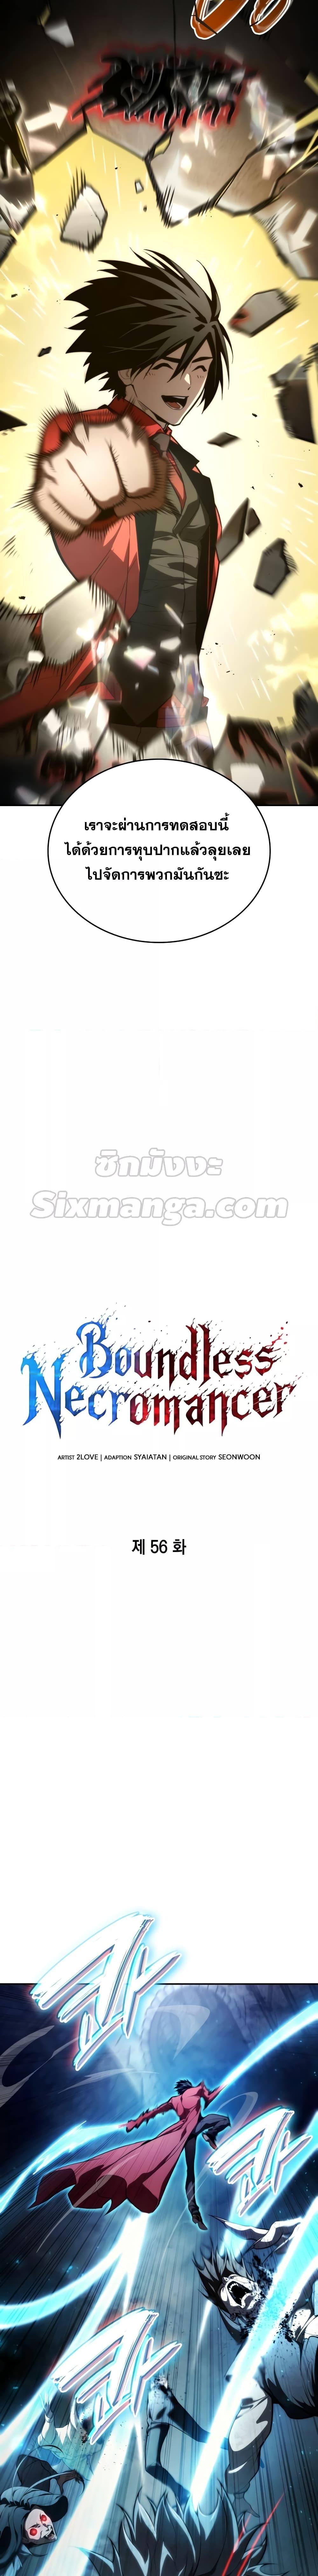 Boundless Necromancer 56 04